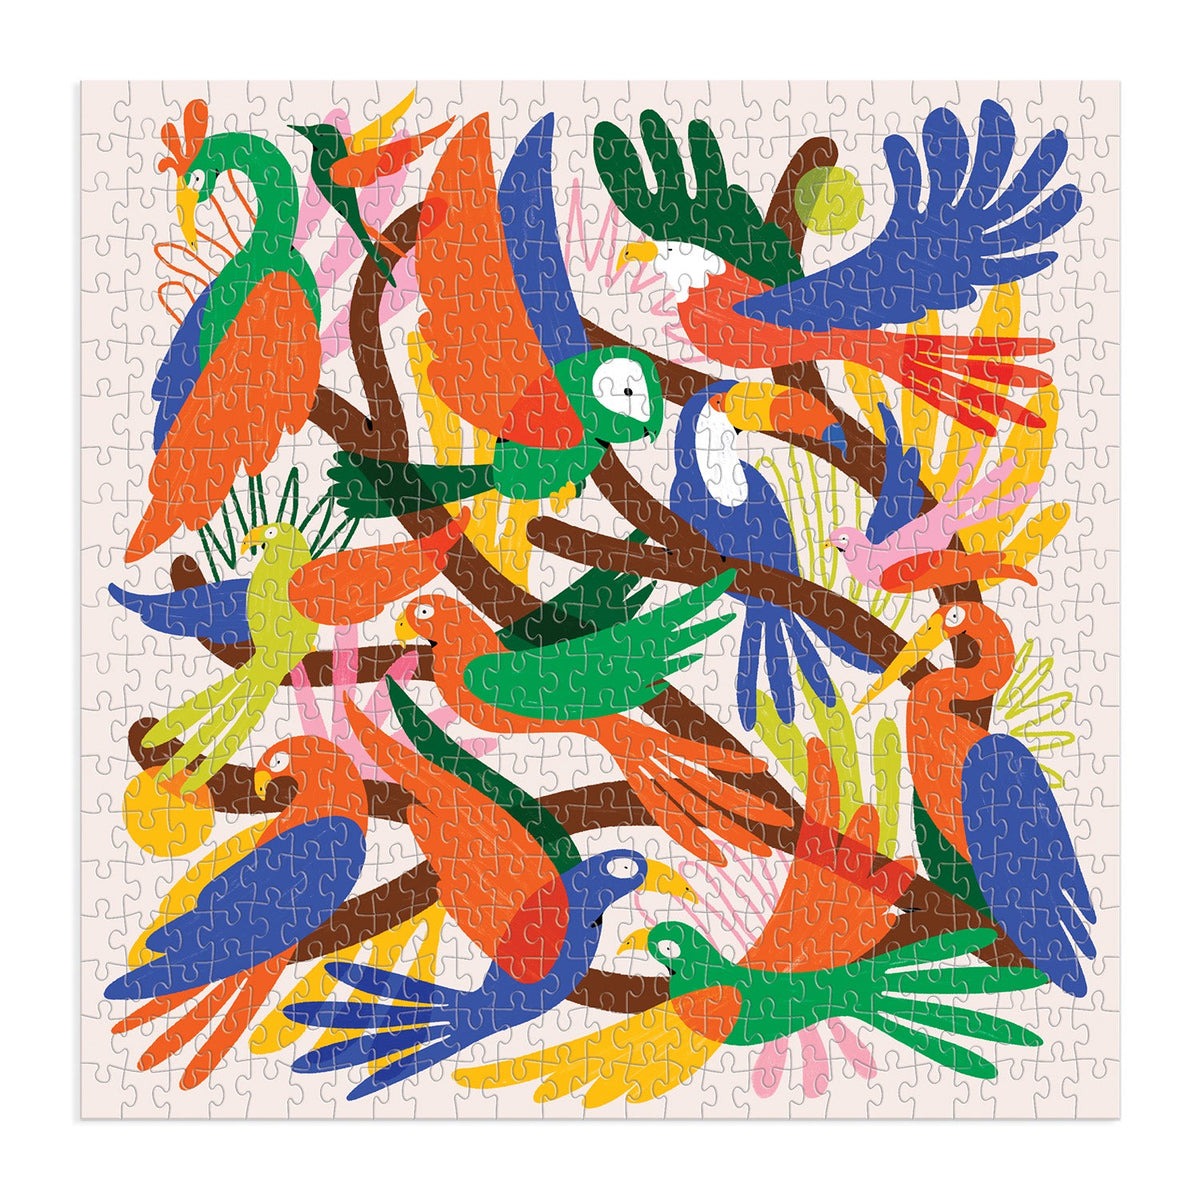 Chromatic Birds 500 Piece Puzzle Galison 